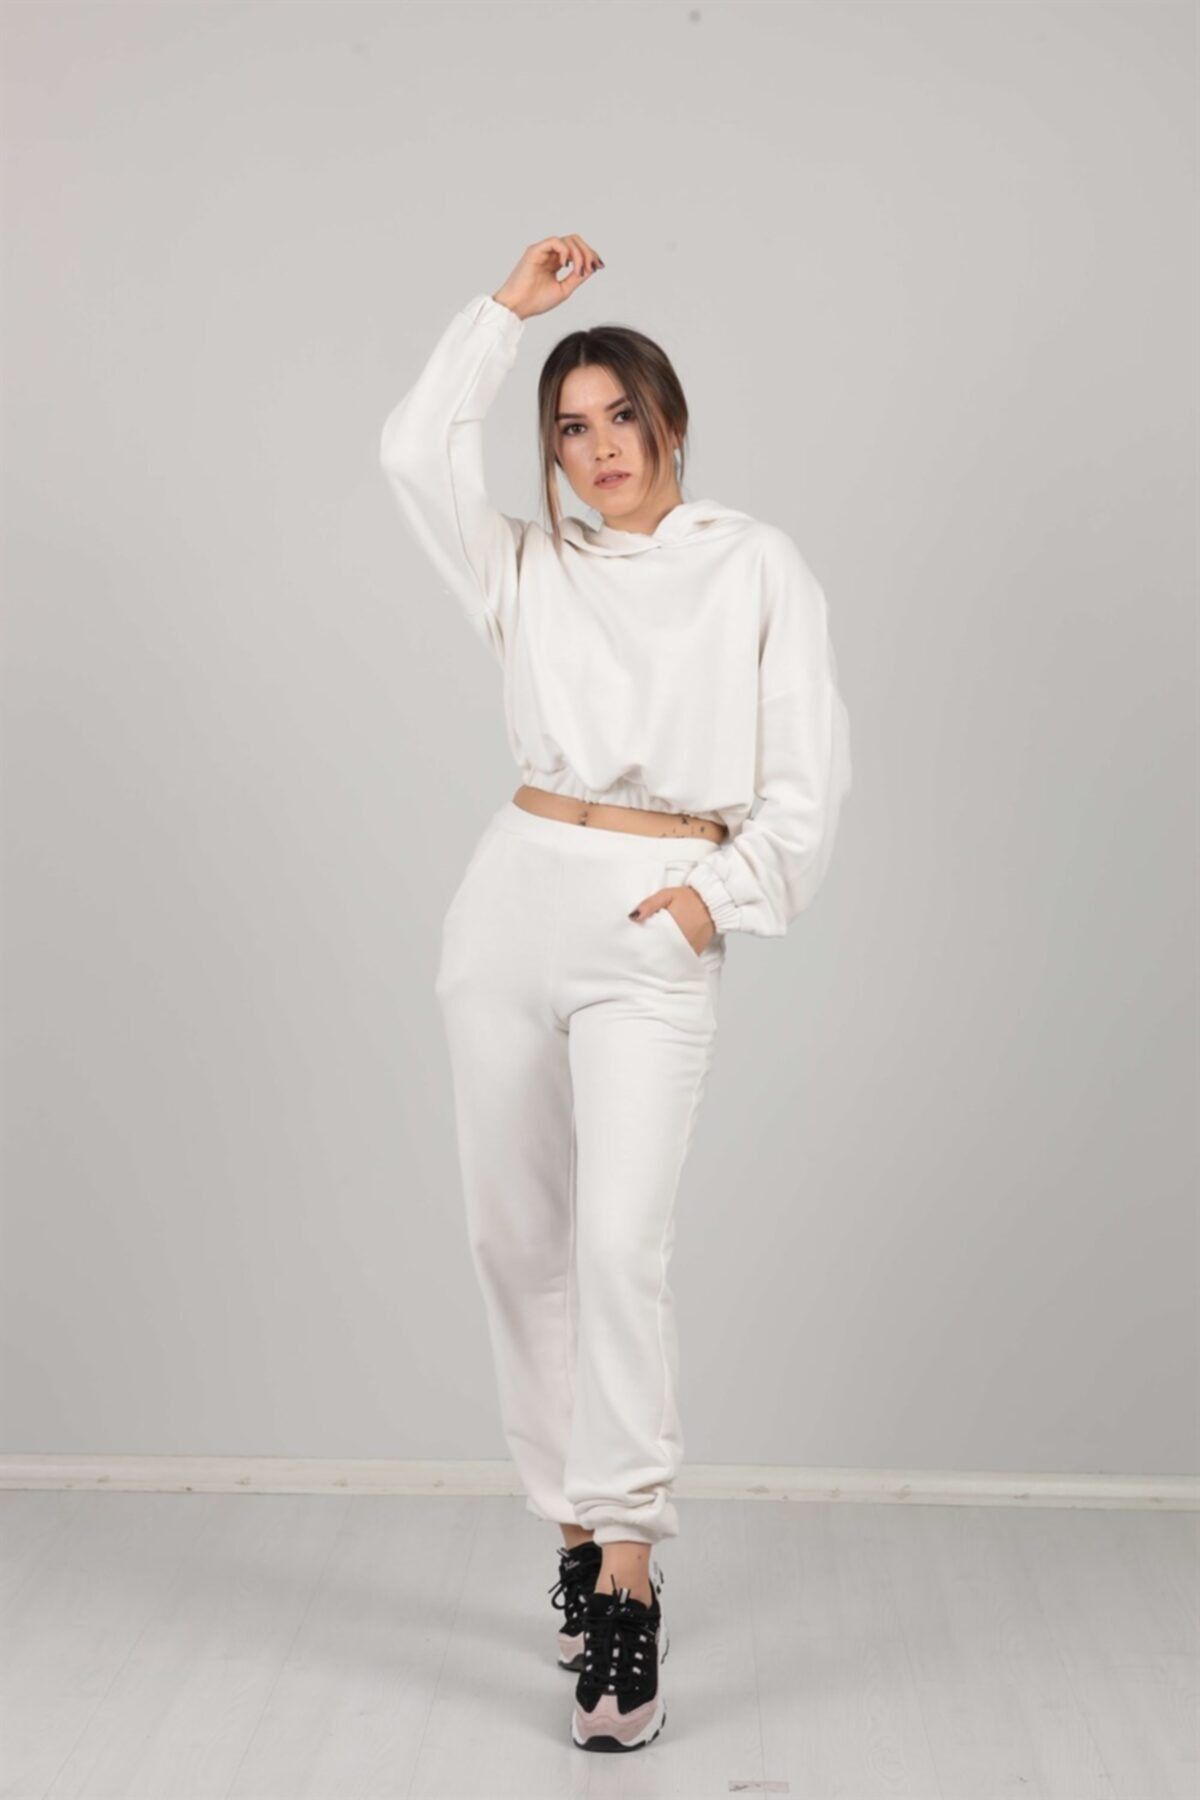 giyimmasalı 3 Iplik Kumaş Eşofman Takımı - Beyaz